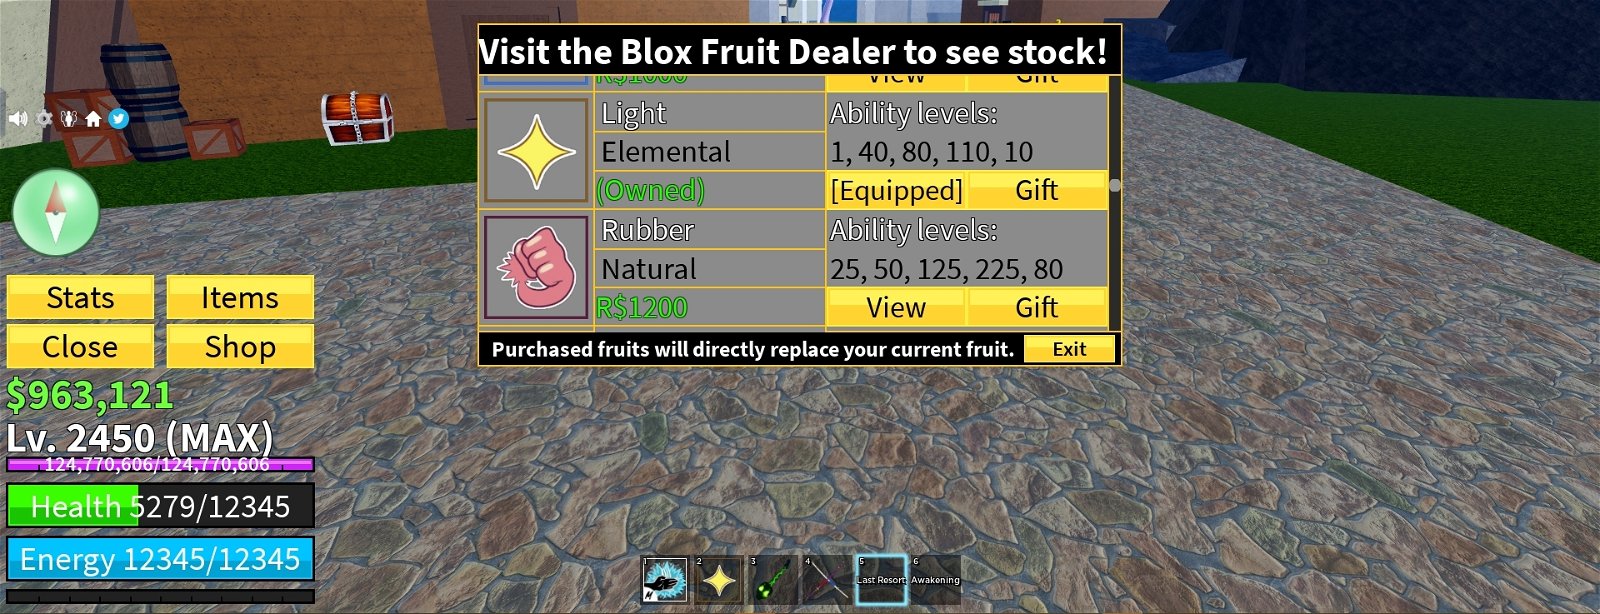 FRUITS ON STOCK!! PHOENIX - 50 - Blox Fruit Services